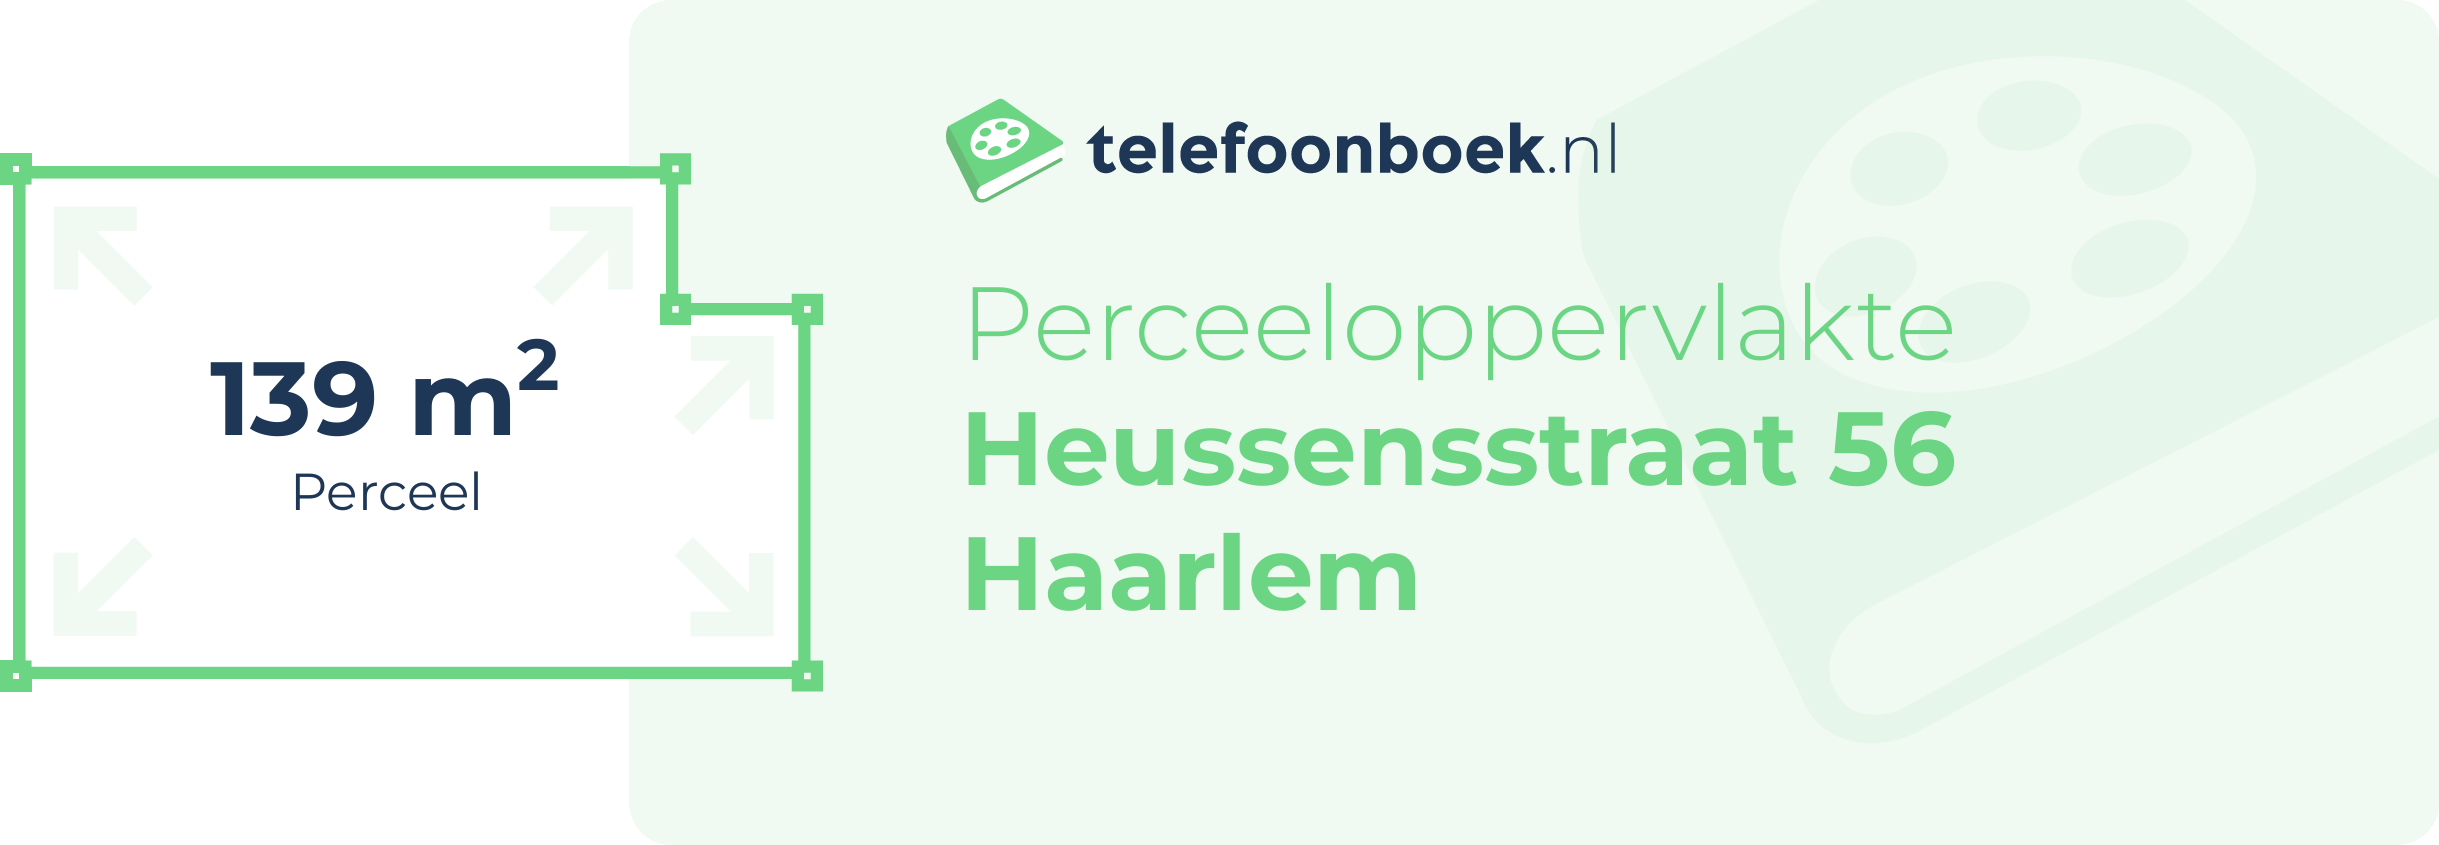 Perceeloppervlakte Heussensstraat 56 Haarlem